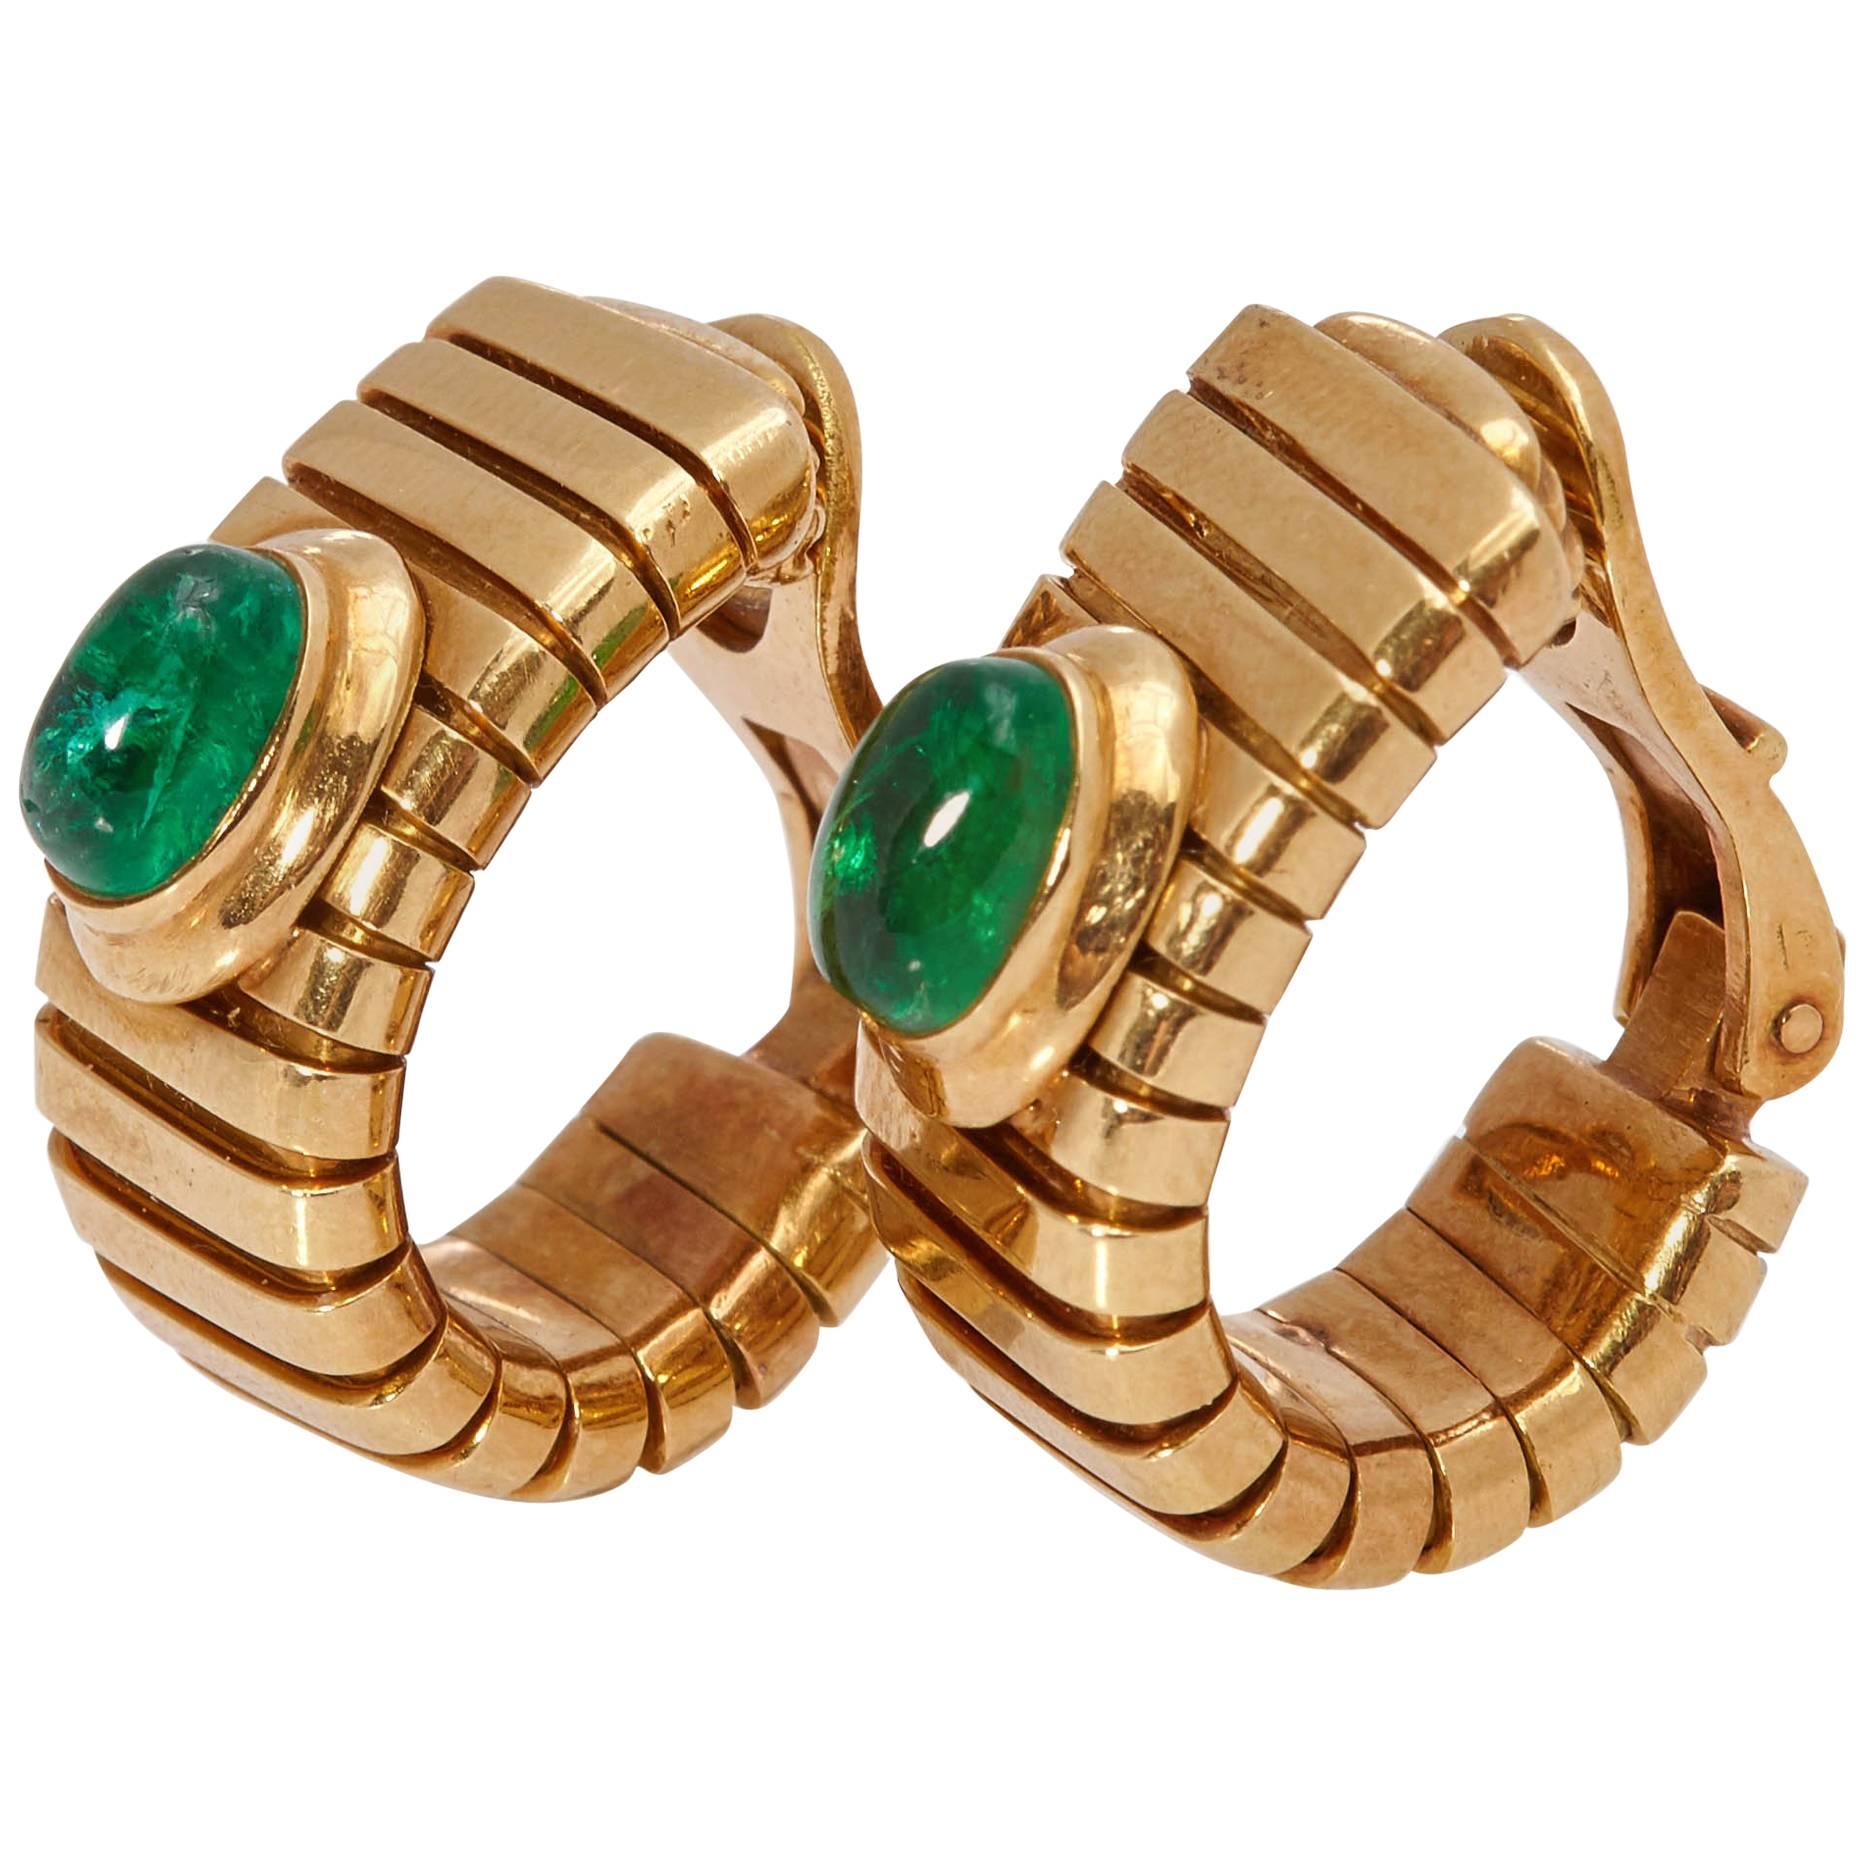 Bulgari Emerald and Gold Tubogas Earclips